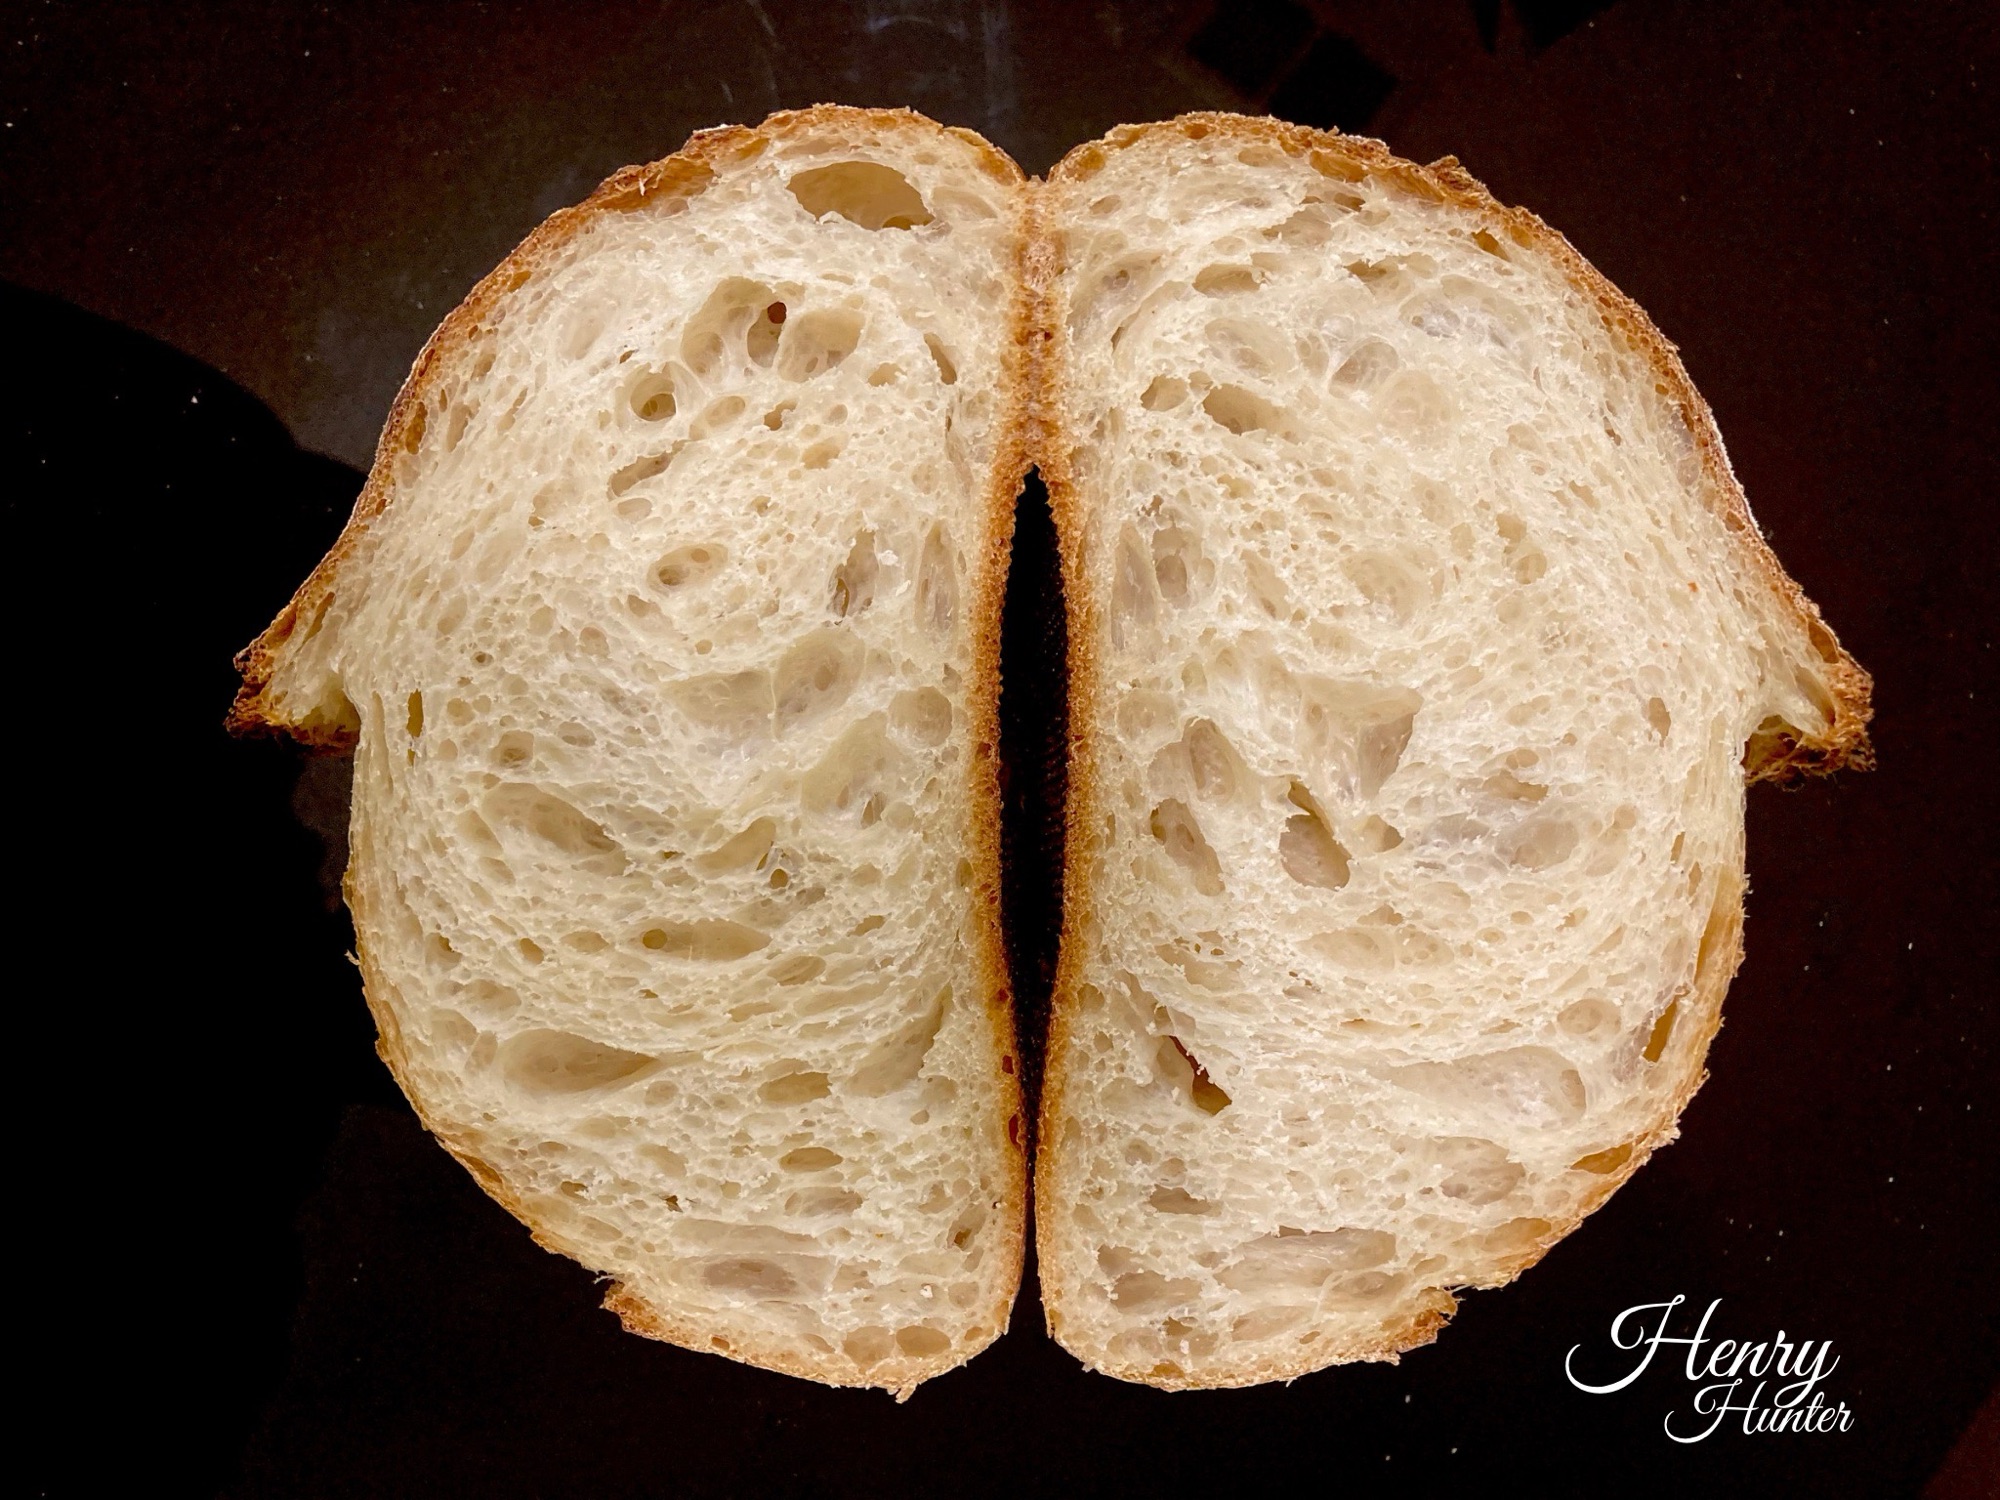 Henry's Sourdough Bread-Making Process: A Straightforward Guide